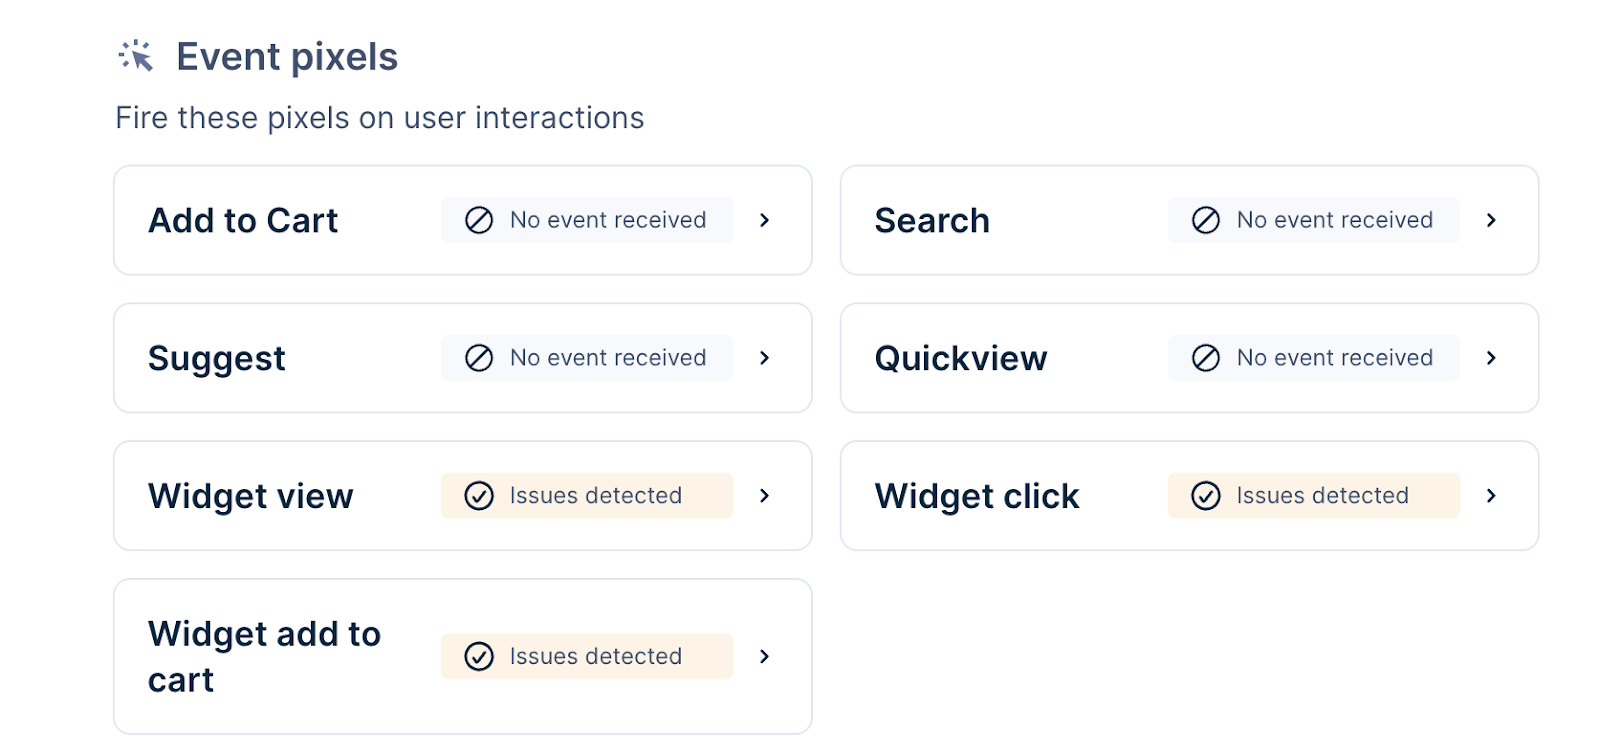 Navigate to Setup > Events management > Event pixels to view widget events